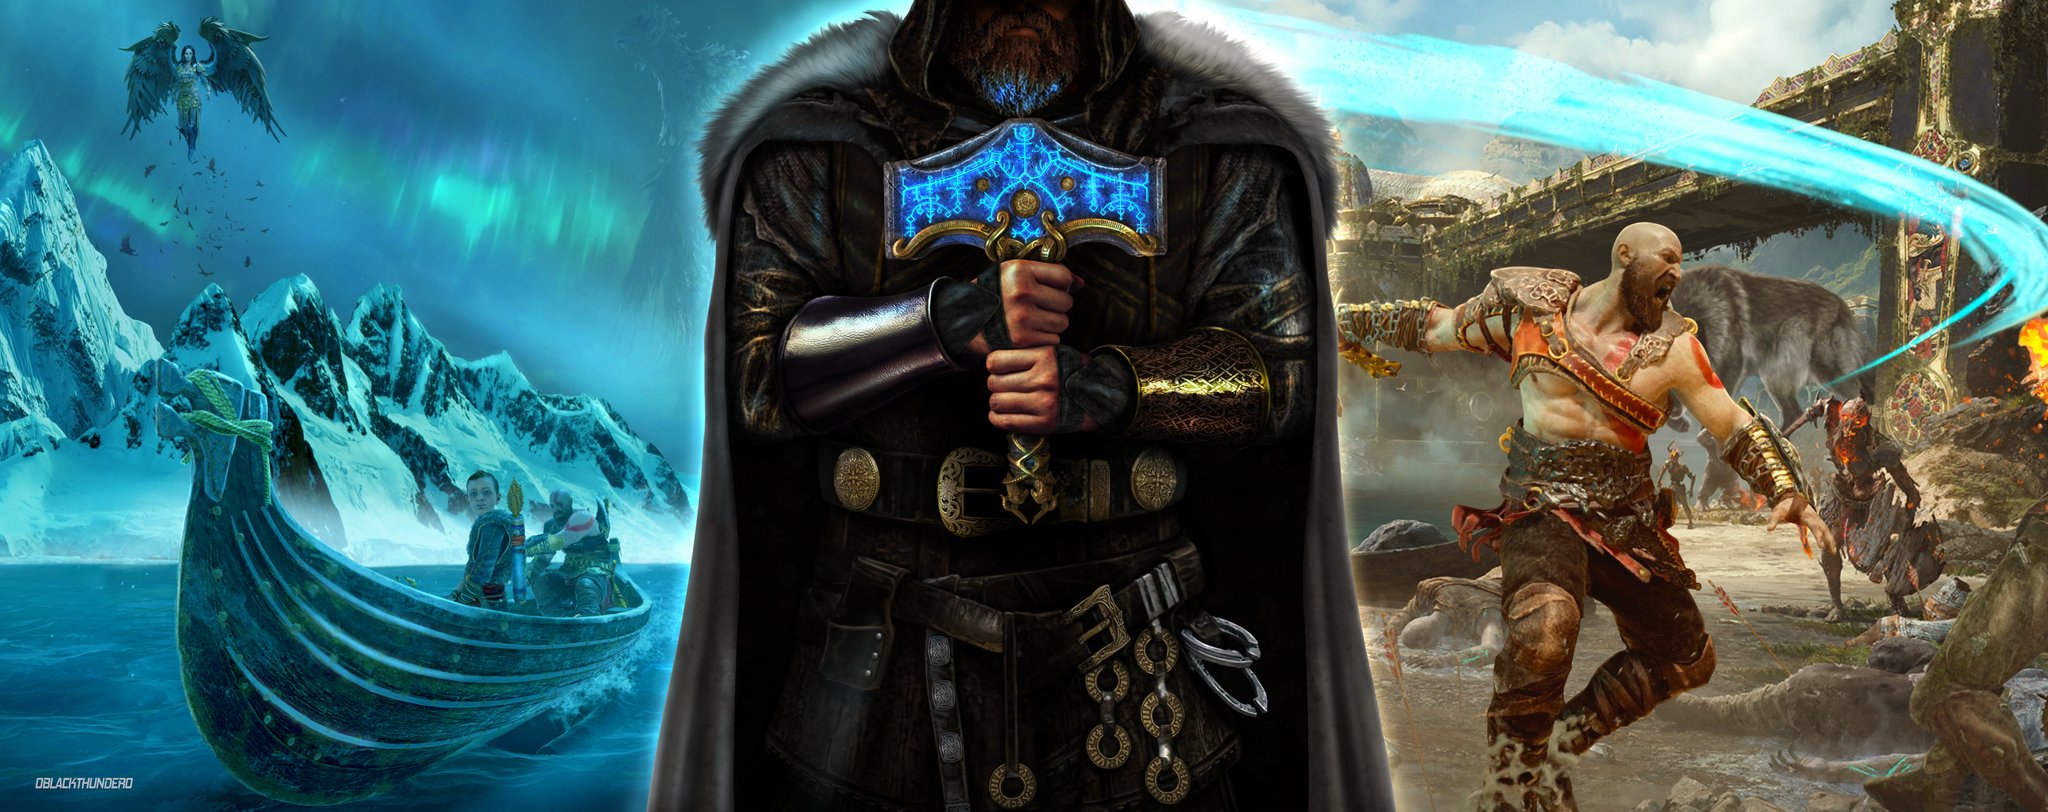 Black Thunder ⚡️ on X: God of War Ragnarok is Coming! #GodofWar  #GodofWarRagnarok Fanart by me.  / X